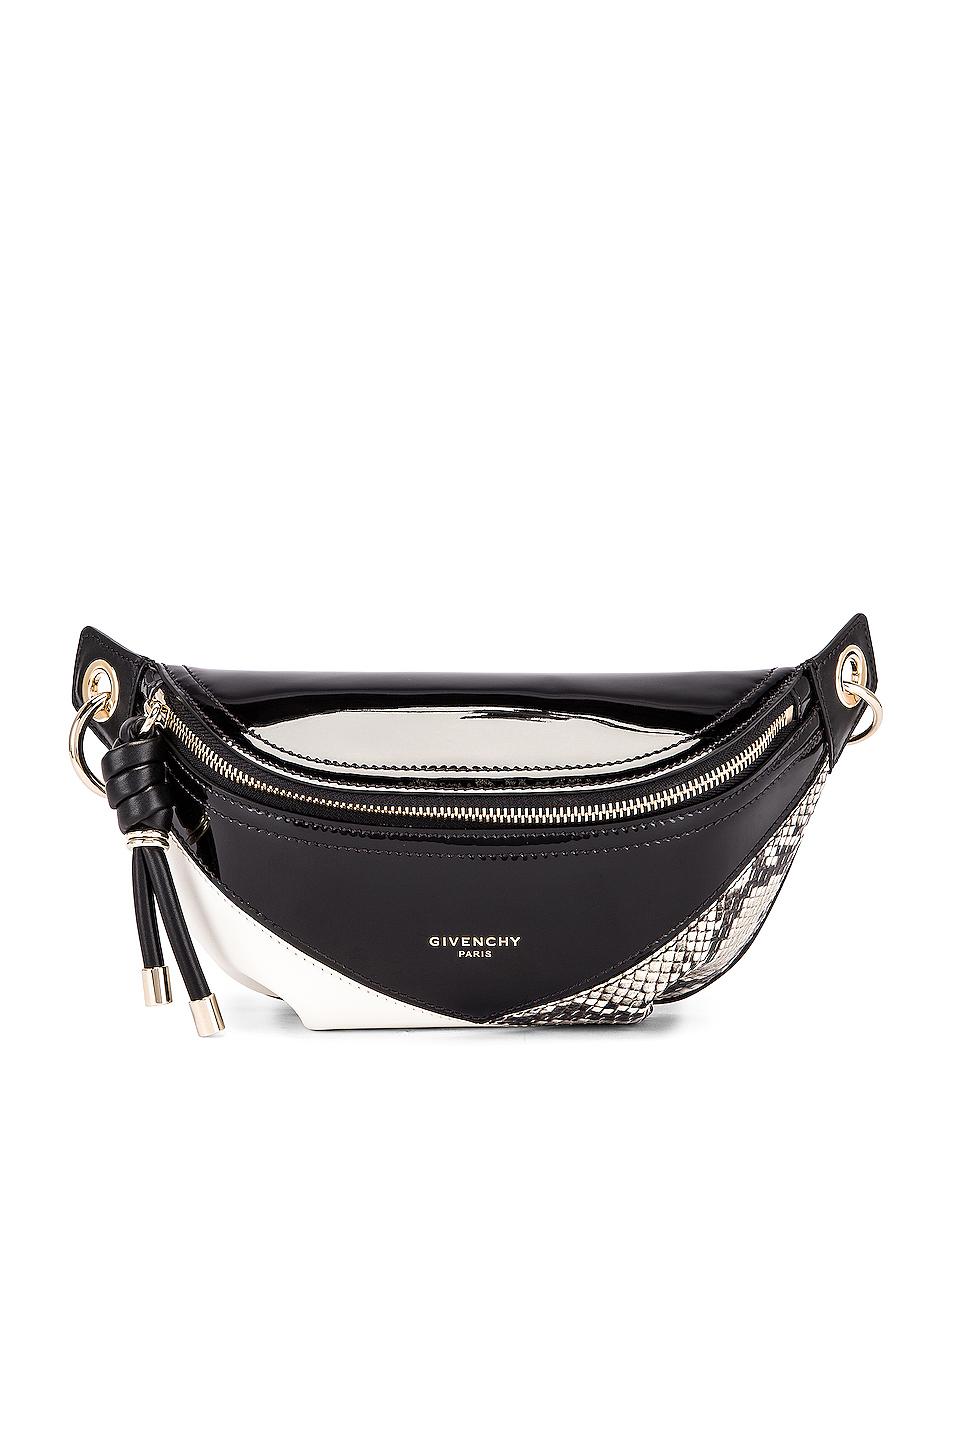 Givenchy Leather Mini Whip Belt Bag in Black & White (Black) - Lyst